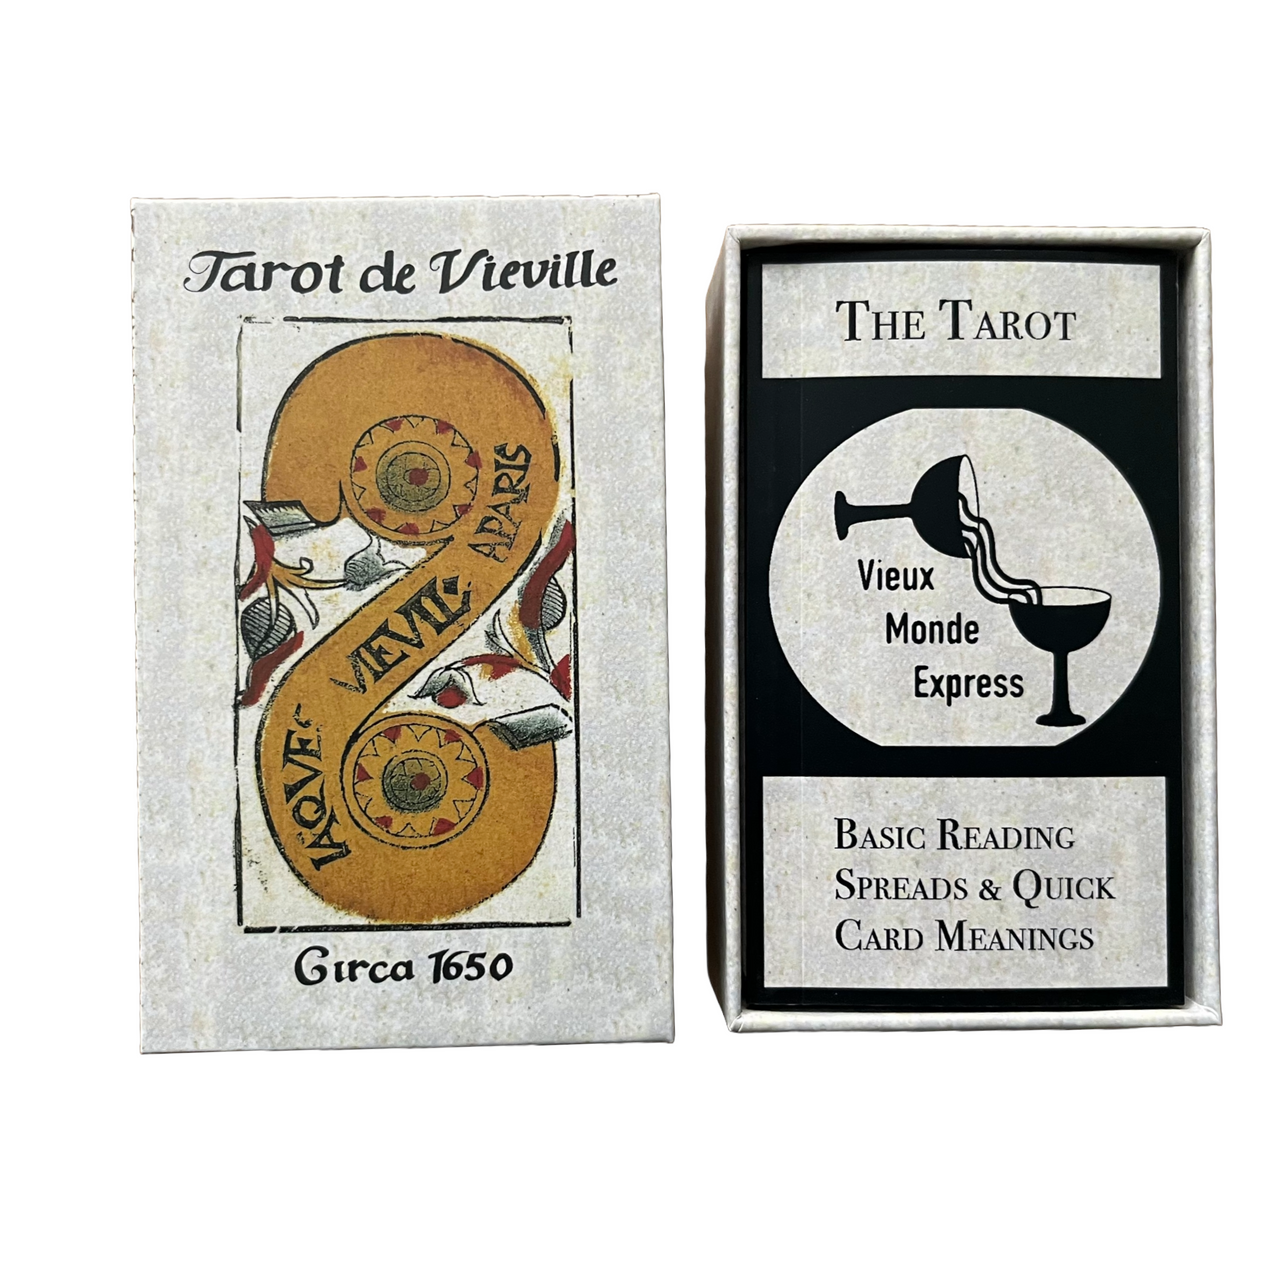 Vieux Monde Express - Grimaud Tarot de Marseille (1930) at